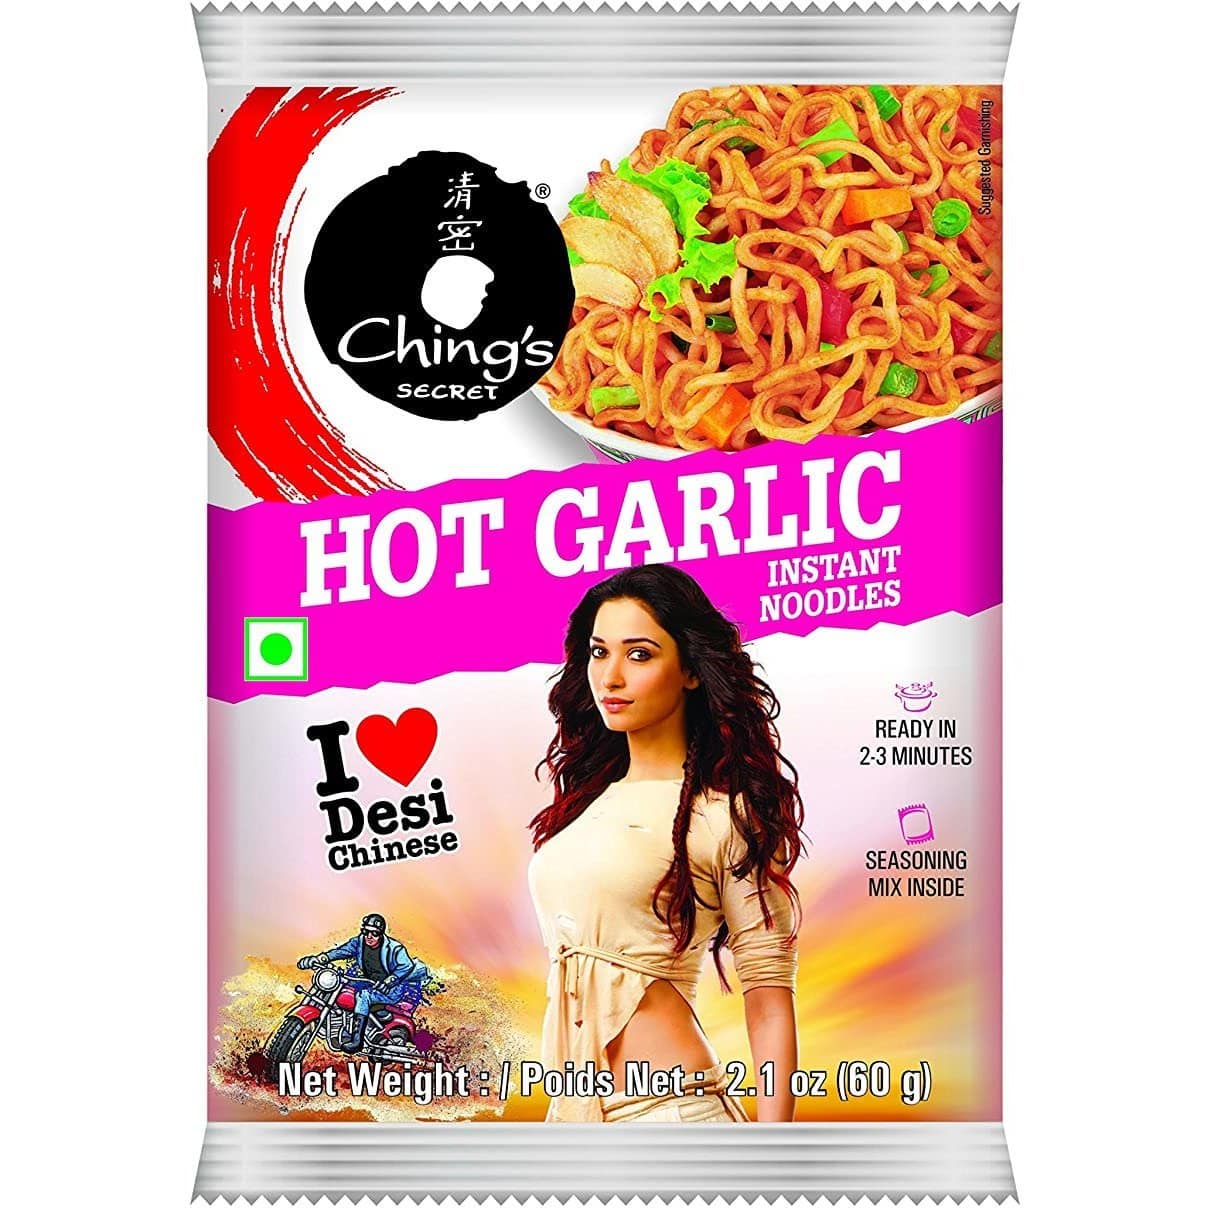 Chings Hot Garlic Noodles 4 Single Pack